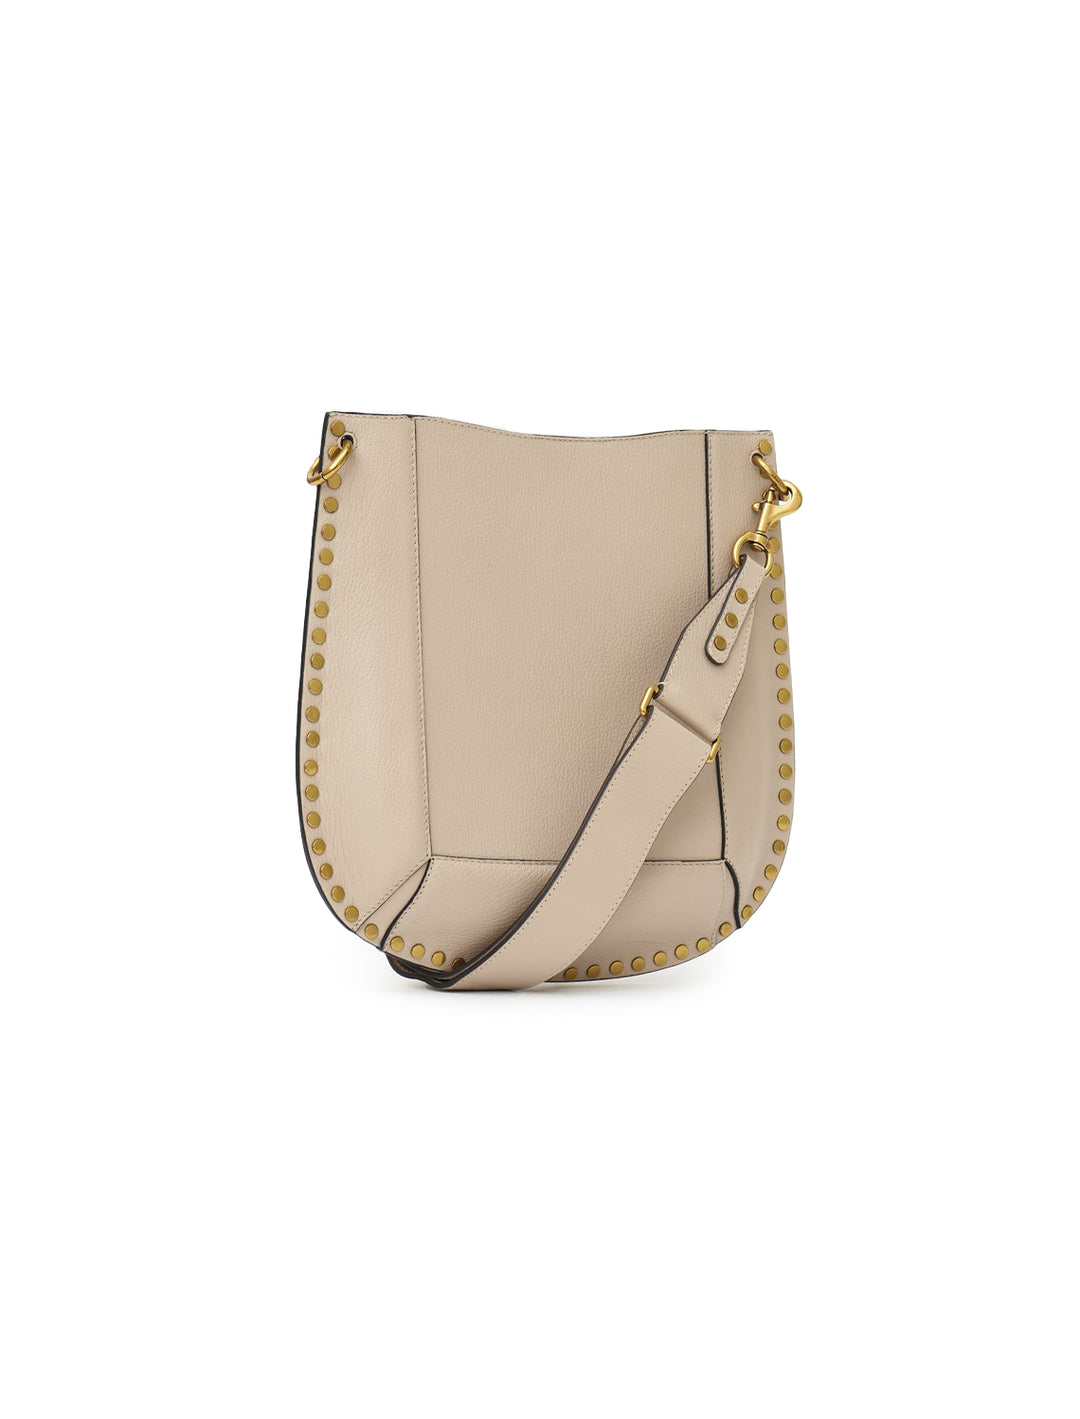 Back angle view of Isabel Marant Etoile's oksan grained leather shoulder bag in light beige.